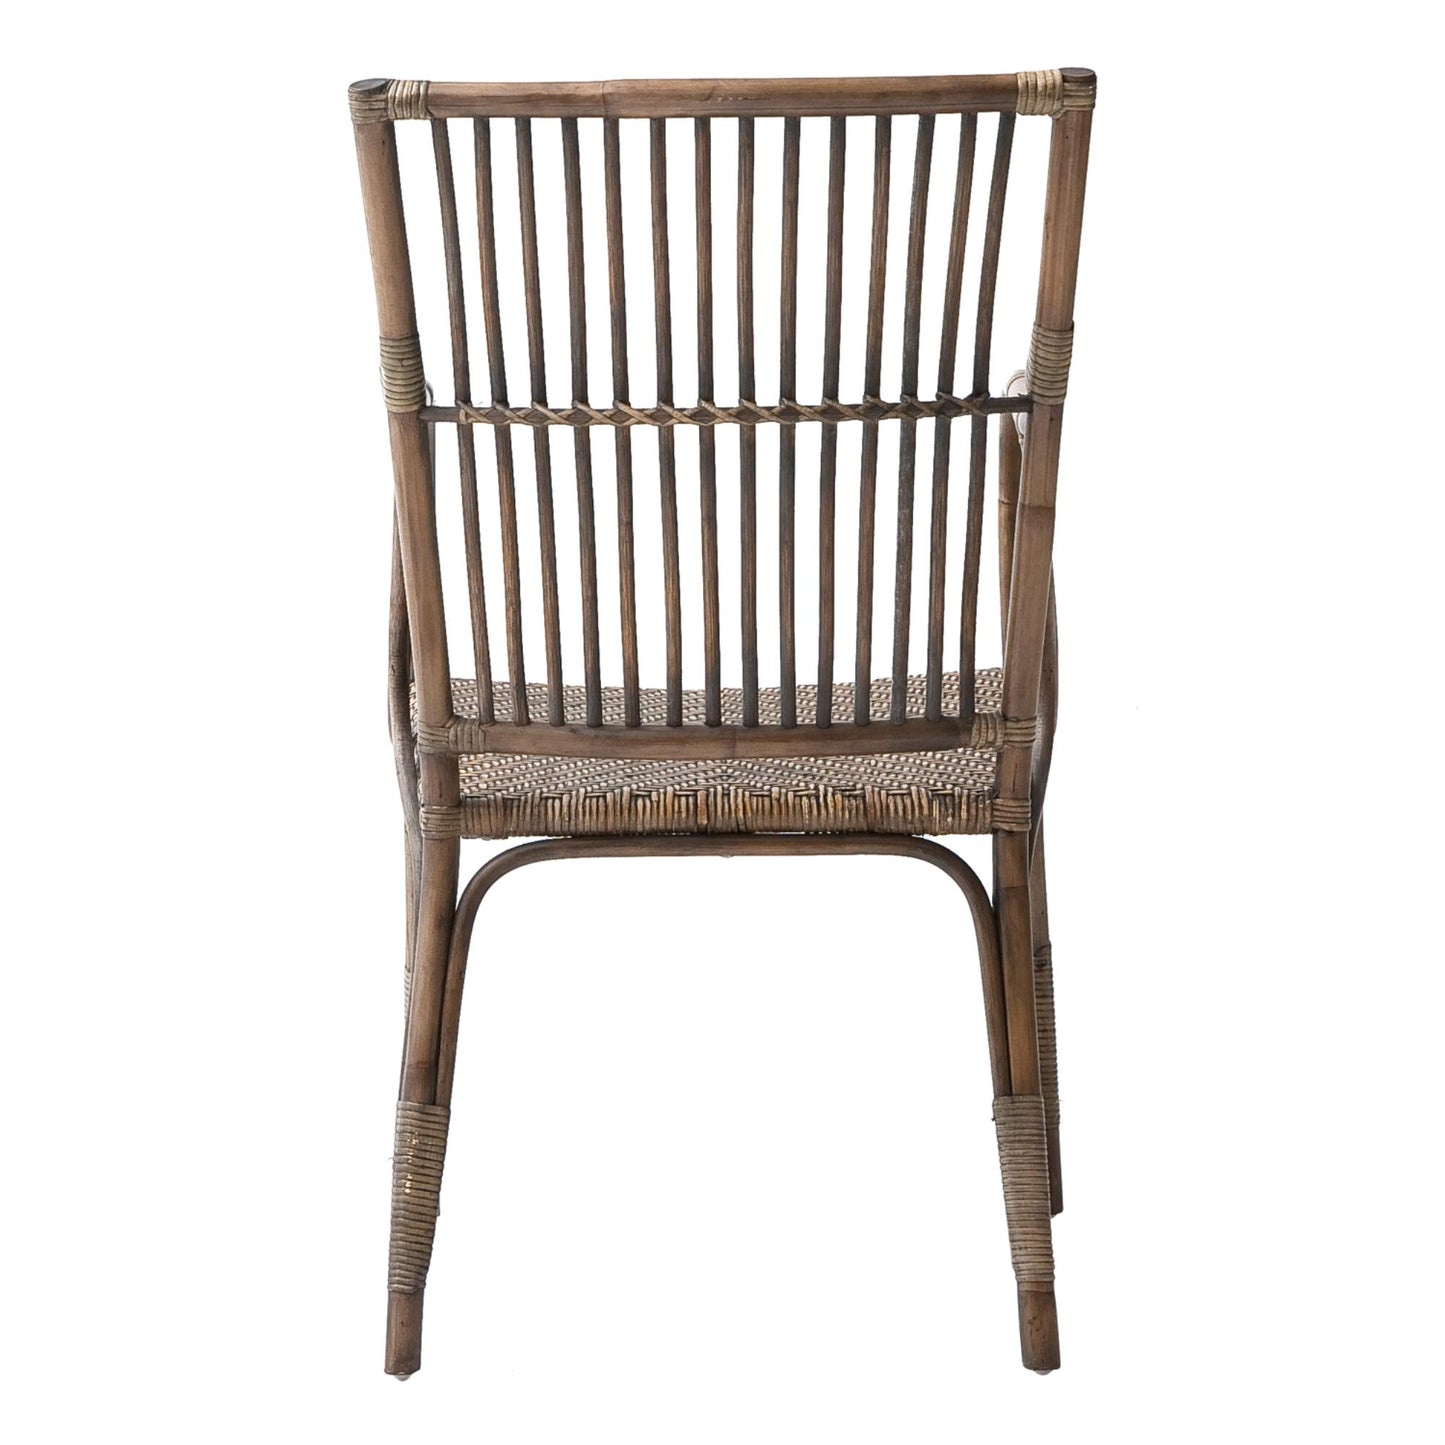 Wickerworks collection by Nova Solo.  Duke Chair (Set of 2) CasaFenix